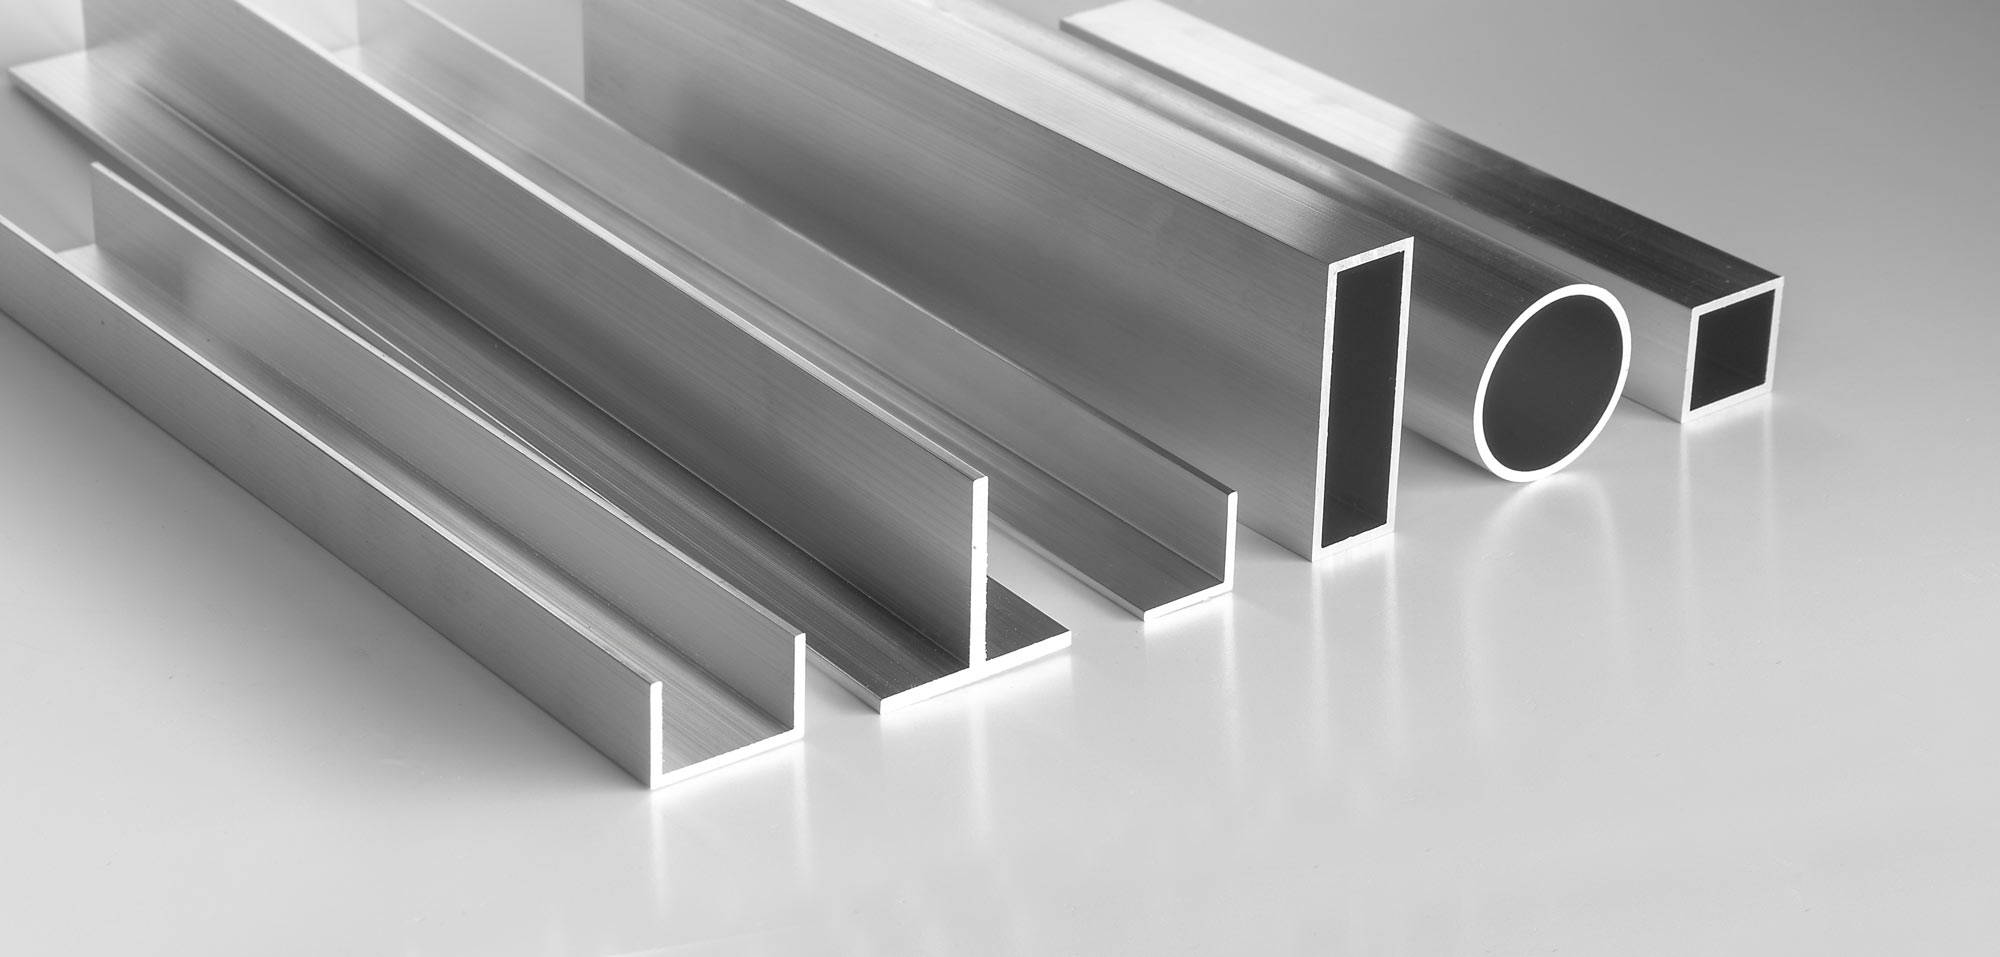 Rohr Profil aus Aluminium 60 x 2 mm online kaufen